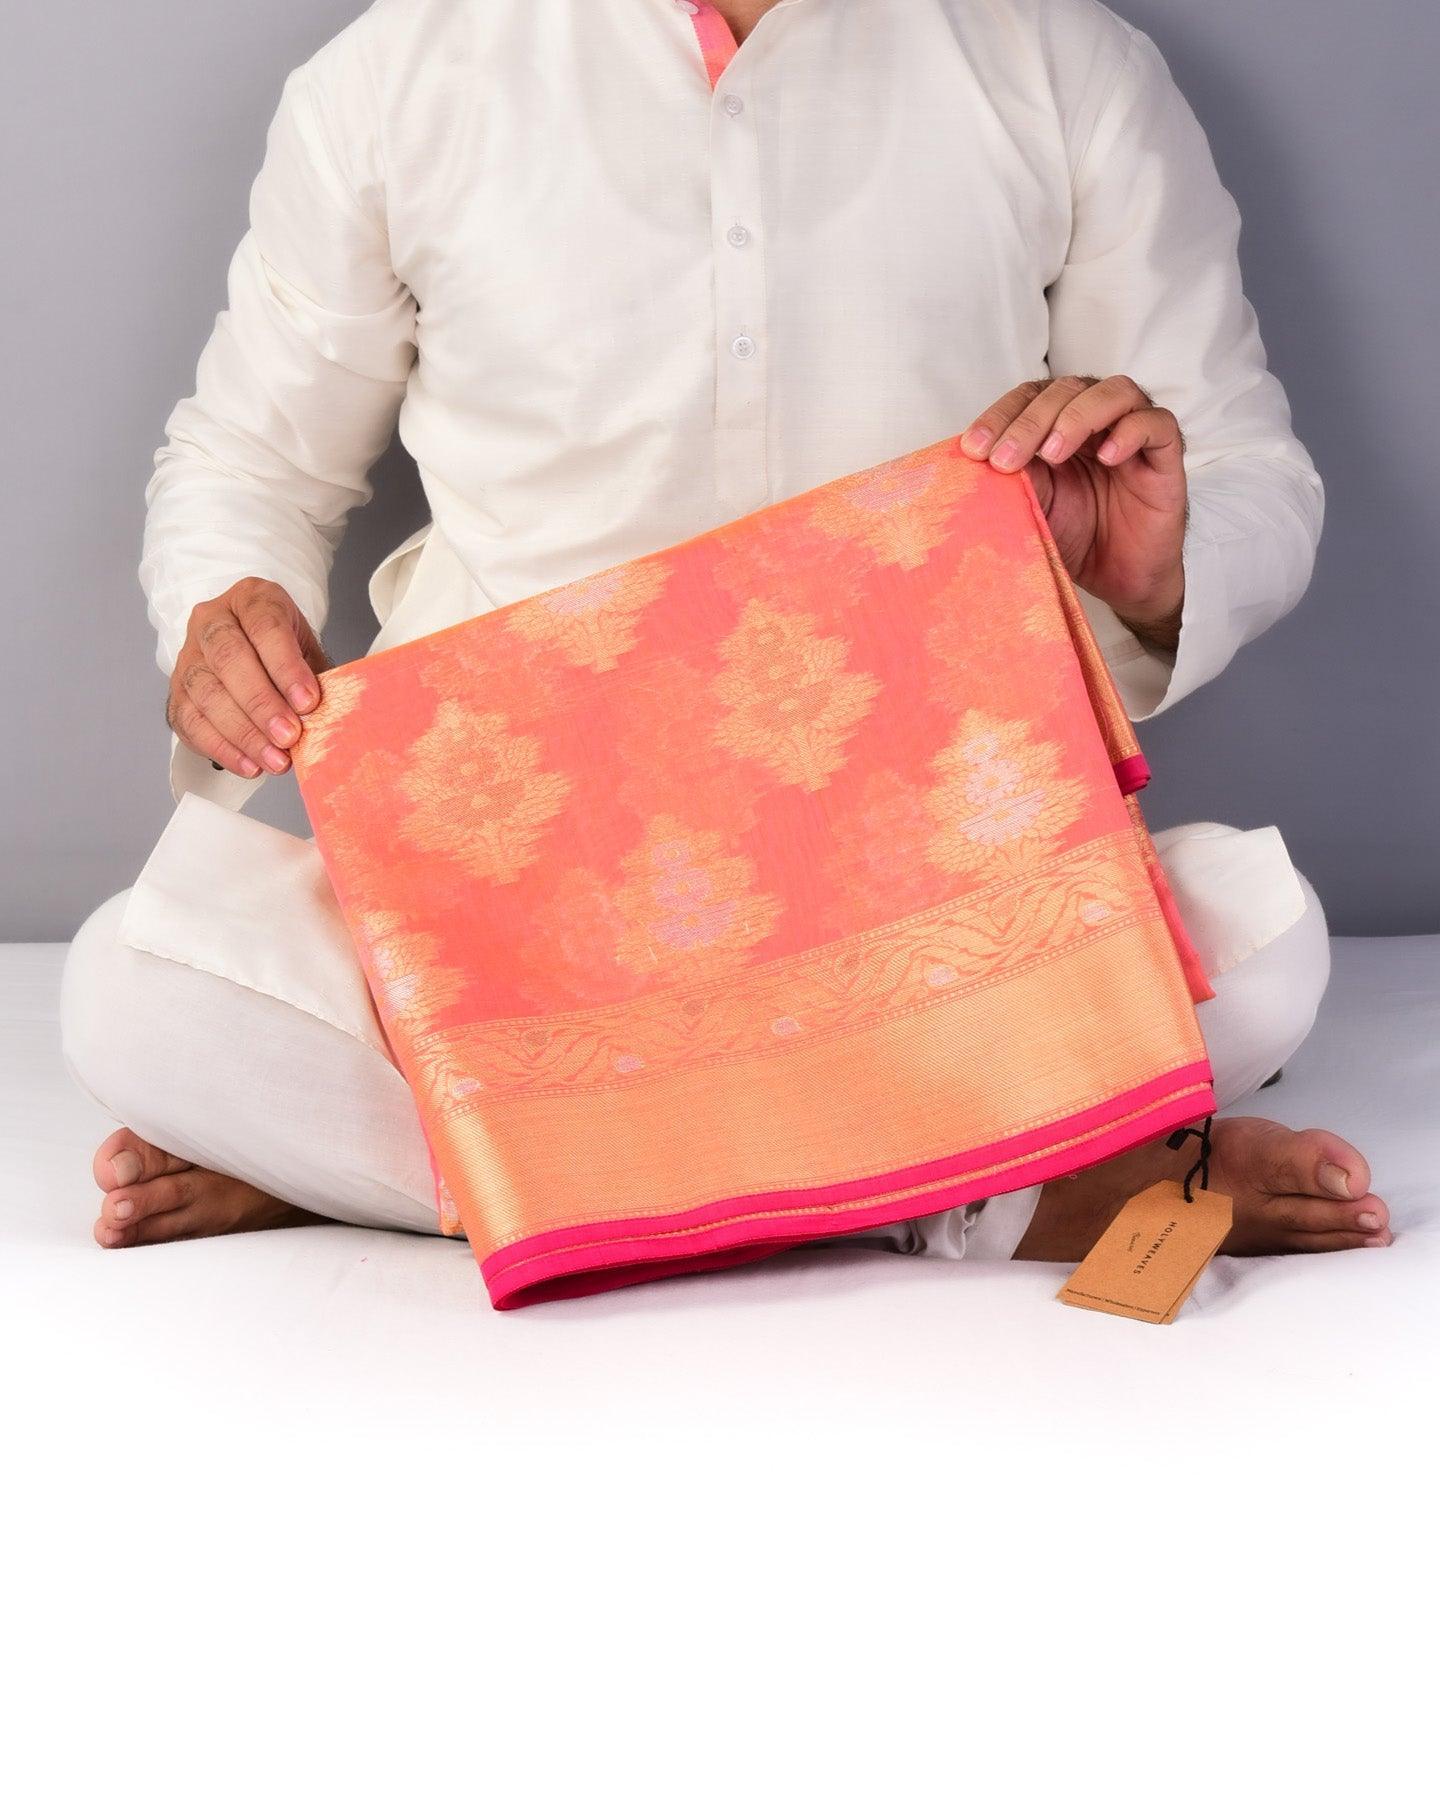 Pink Banarasi 3-Color Zari Cutwork Brocade Woven Cotton Silk Saree - By HolyWeaves, Benares